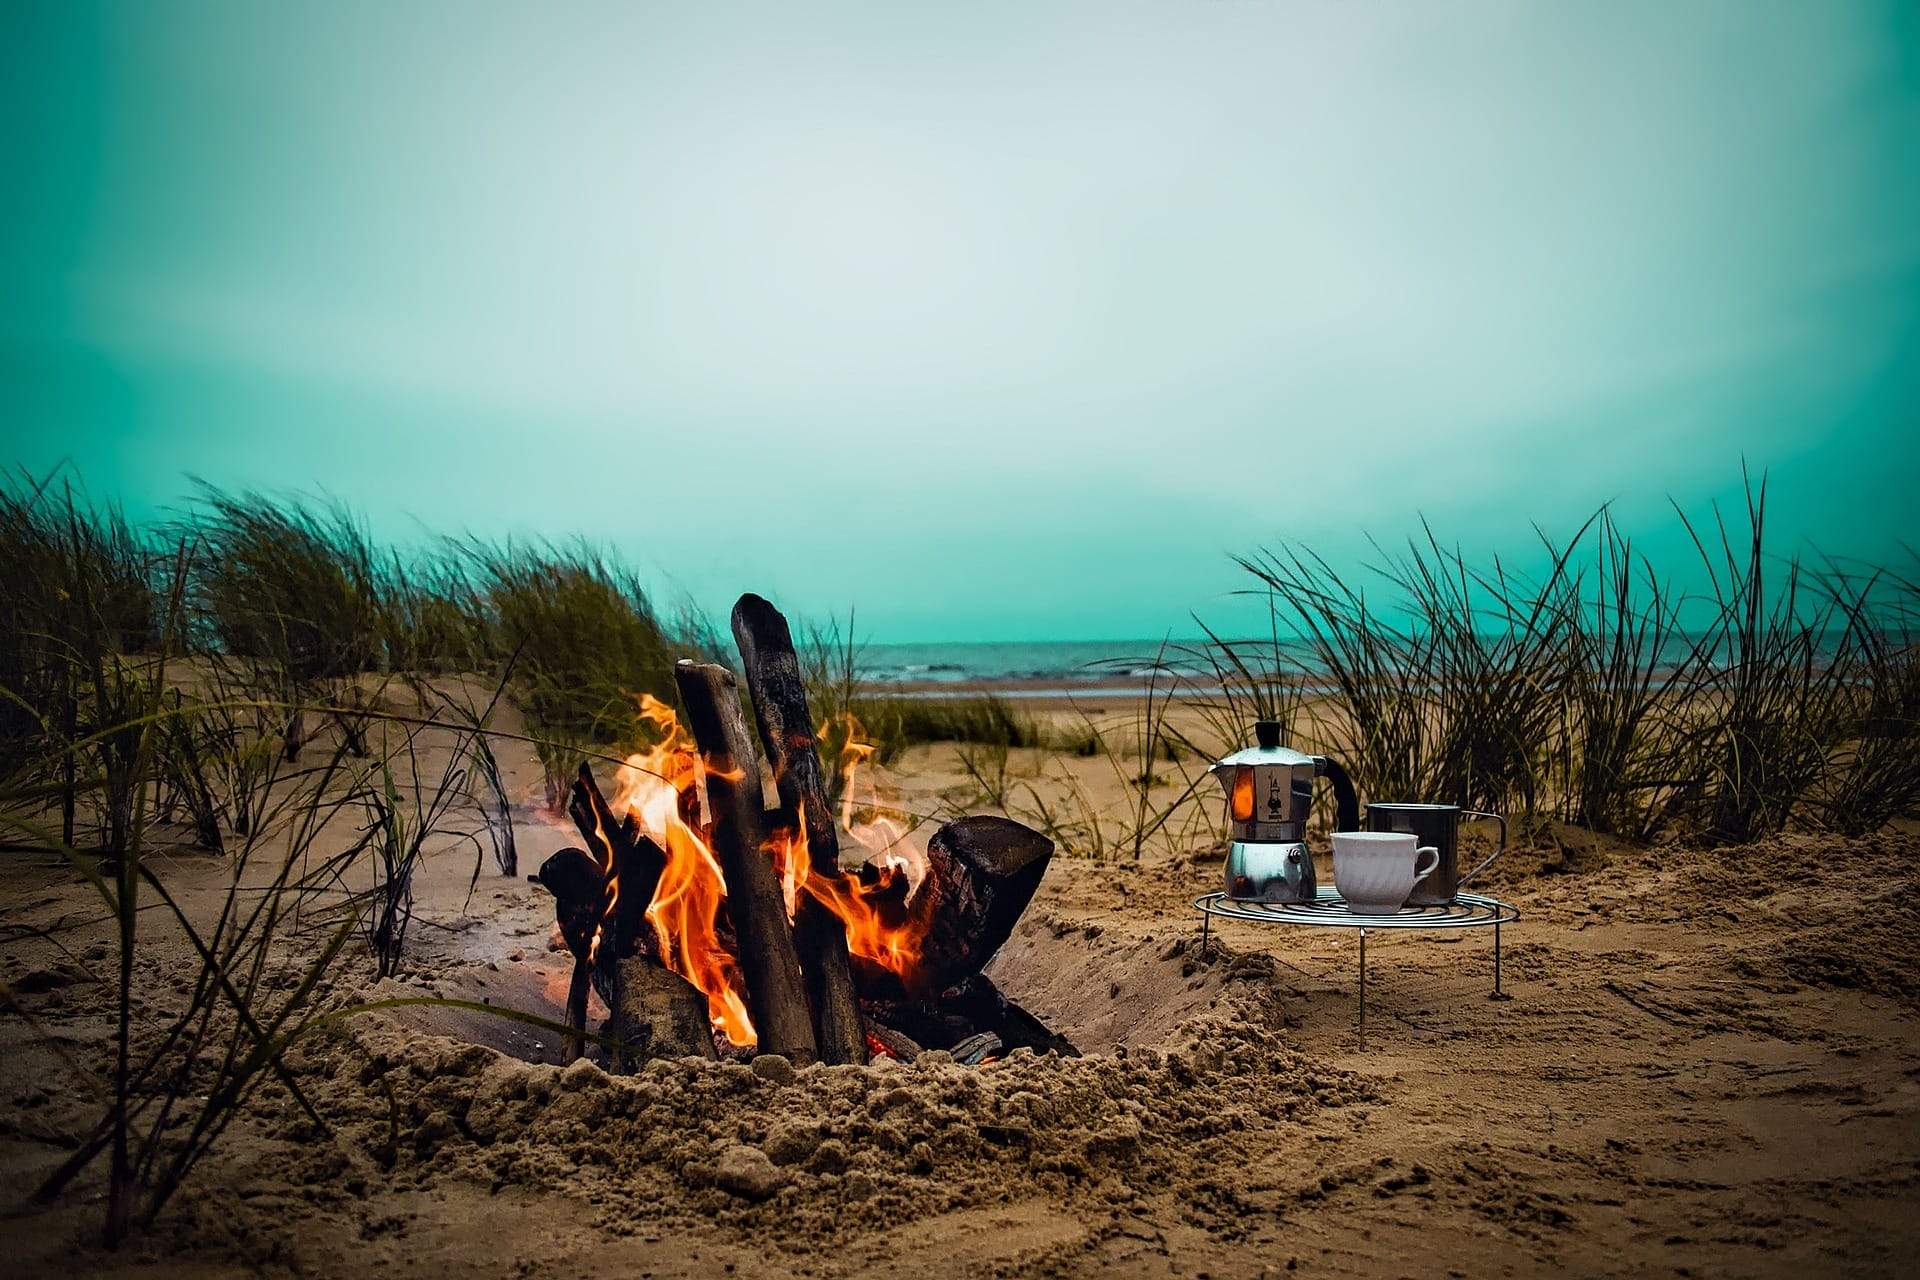 A campfire on the sandy beach near the ocean, perfect for an idyllic getaway.